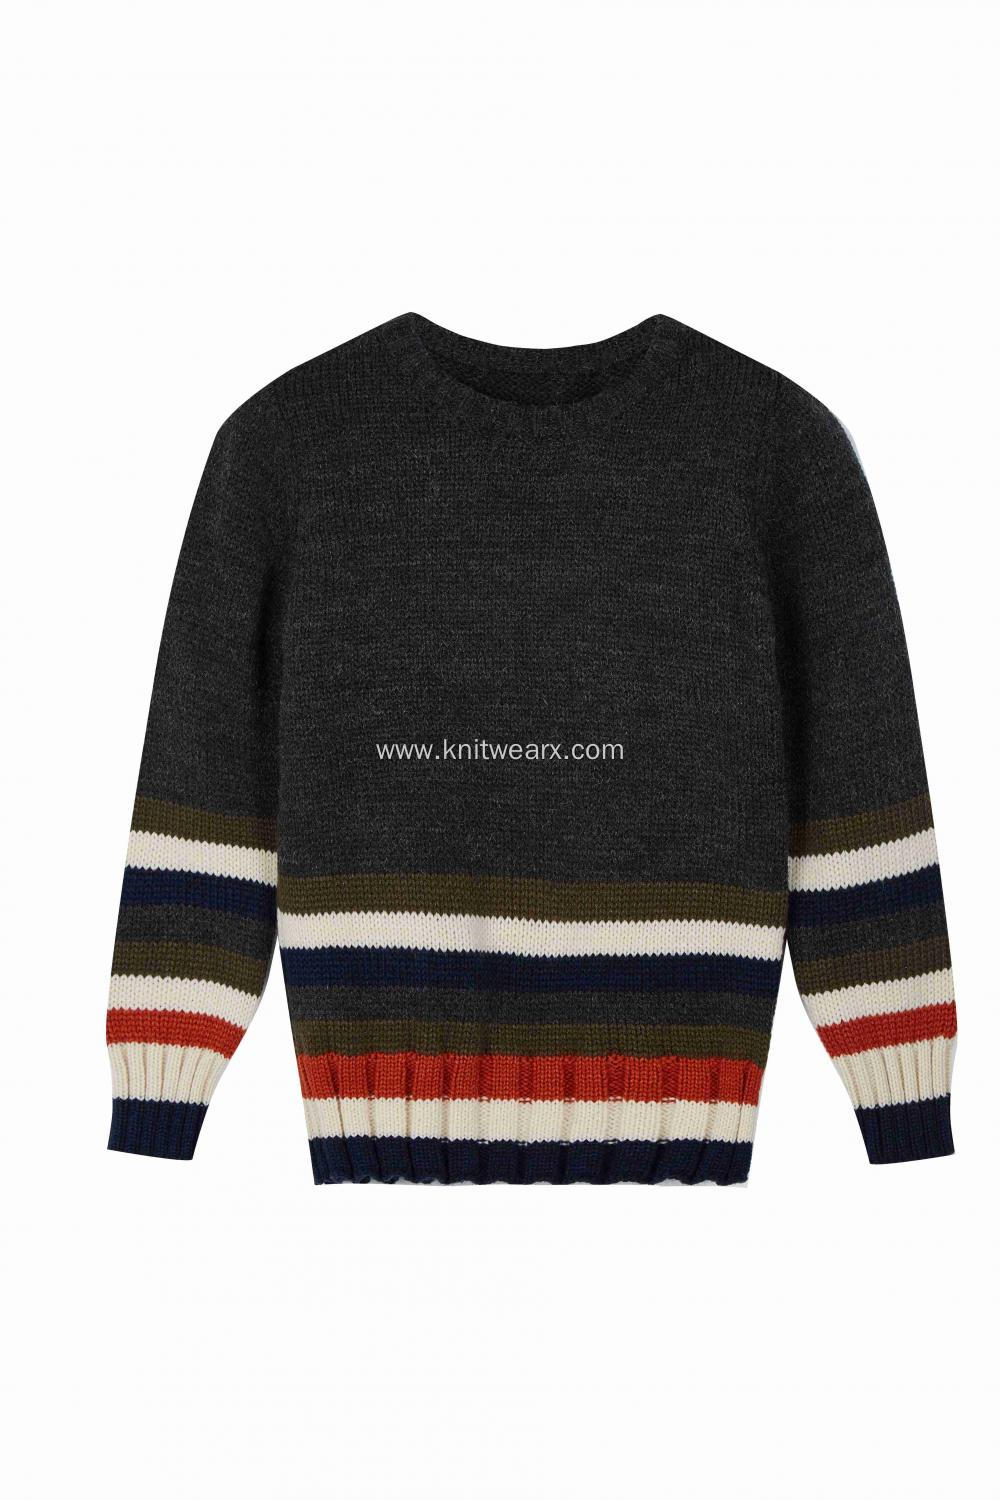 Boy's Knitted Stripe Bottom Crew Neck Pullover